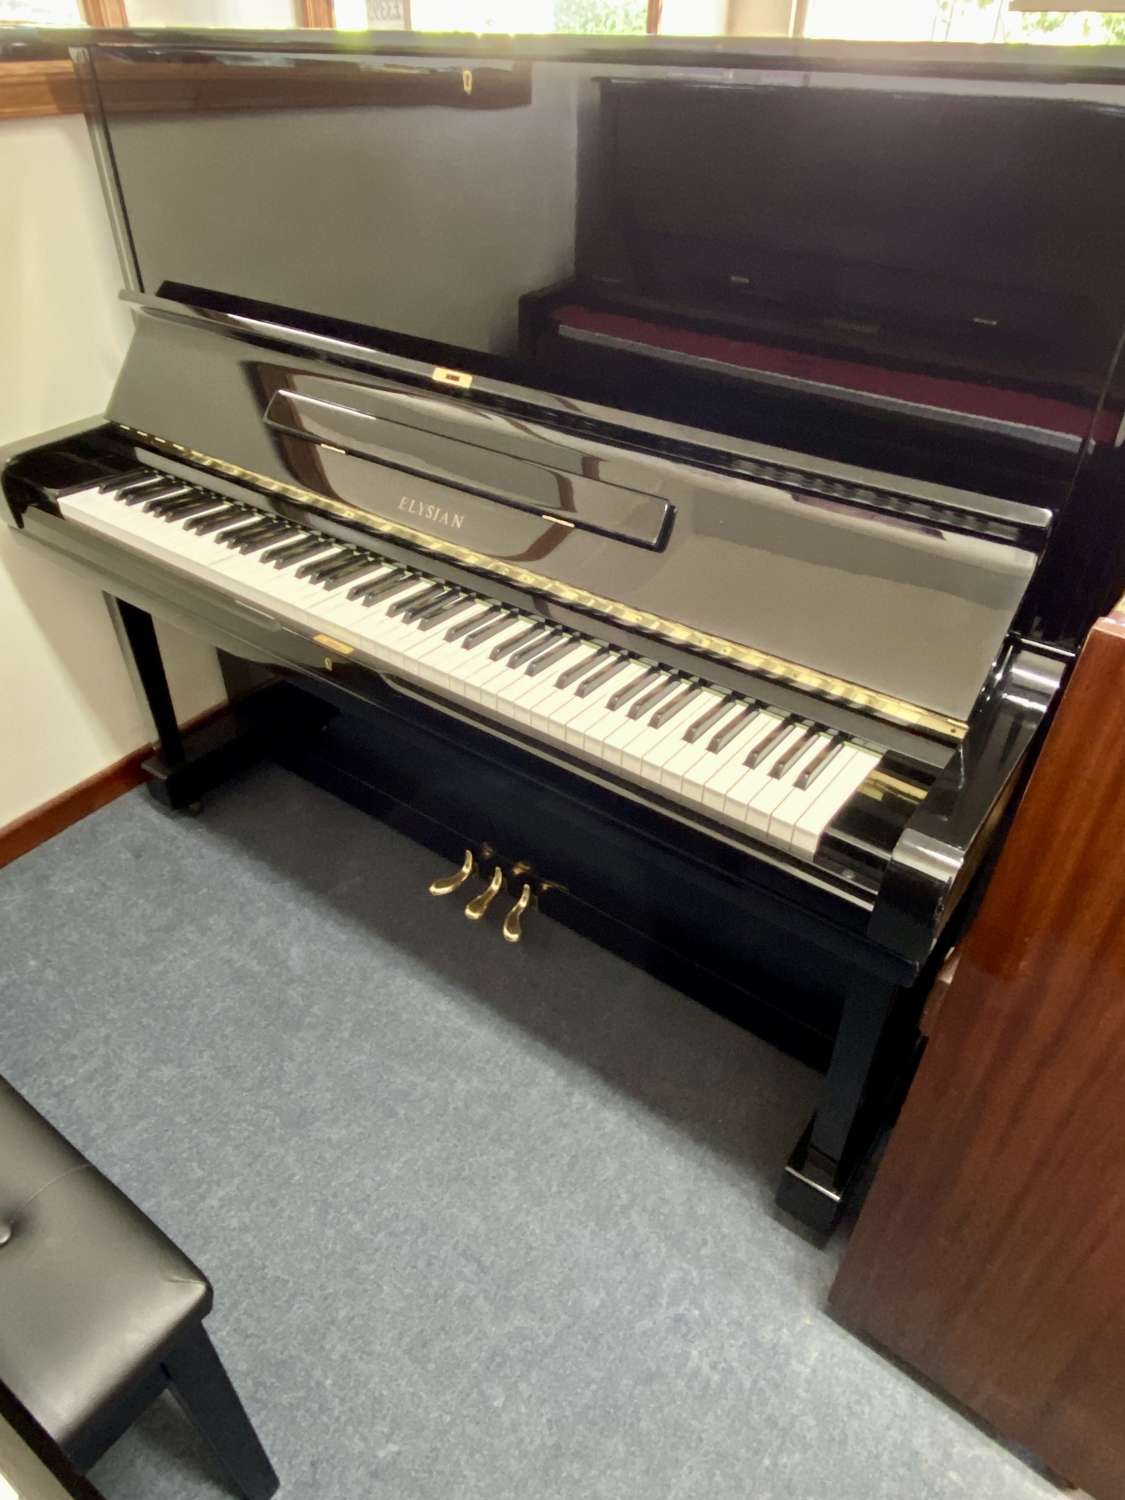 Elysian modern piano for sale 131cm